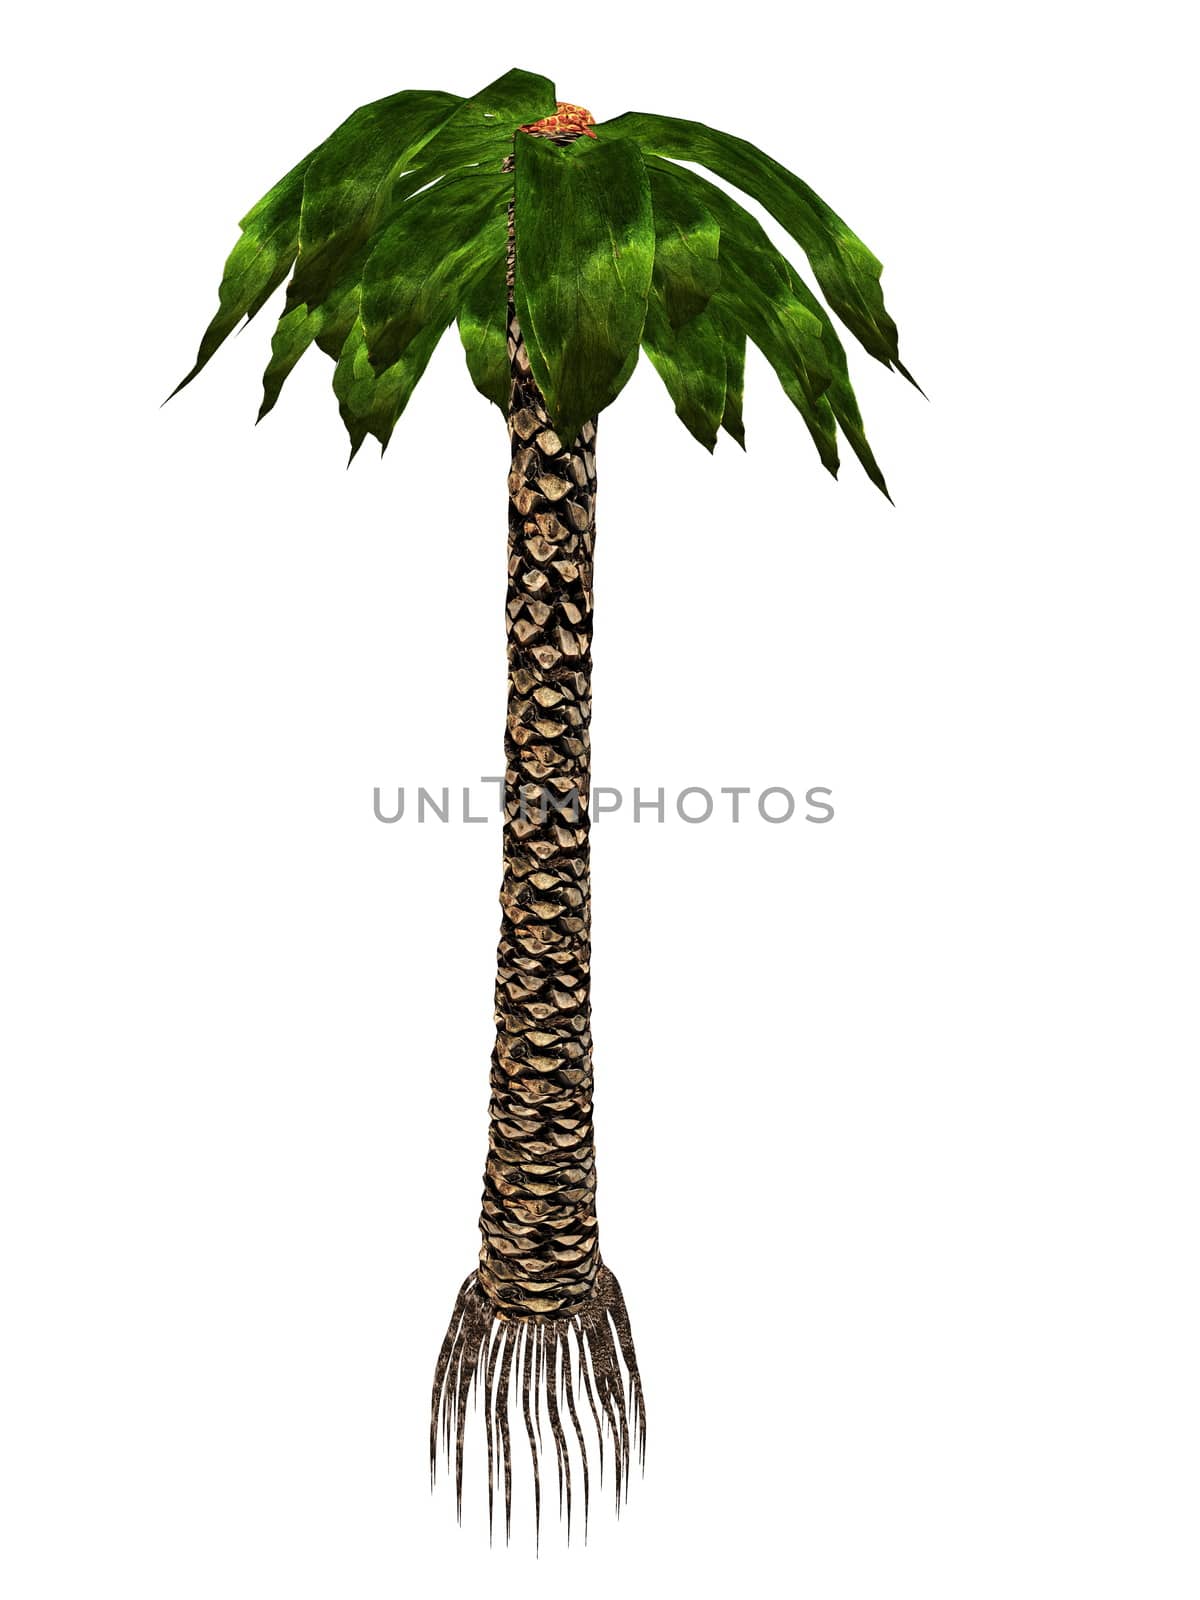 Bjuvia simplex prehistoric tree - 3D render by Elenaphotos21